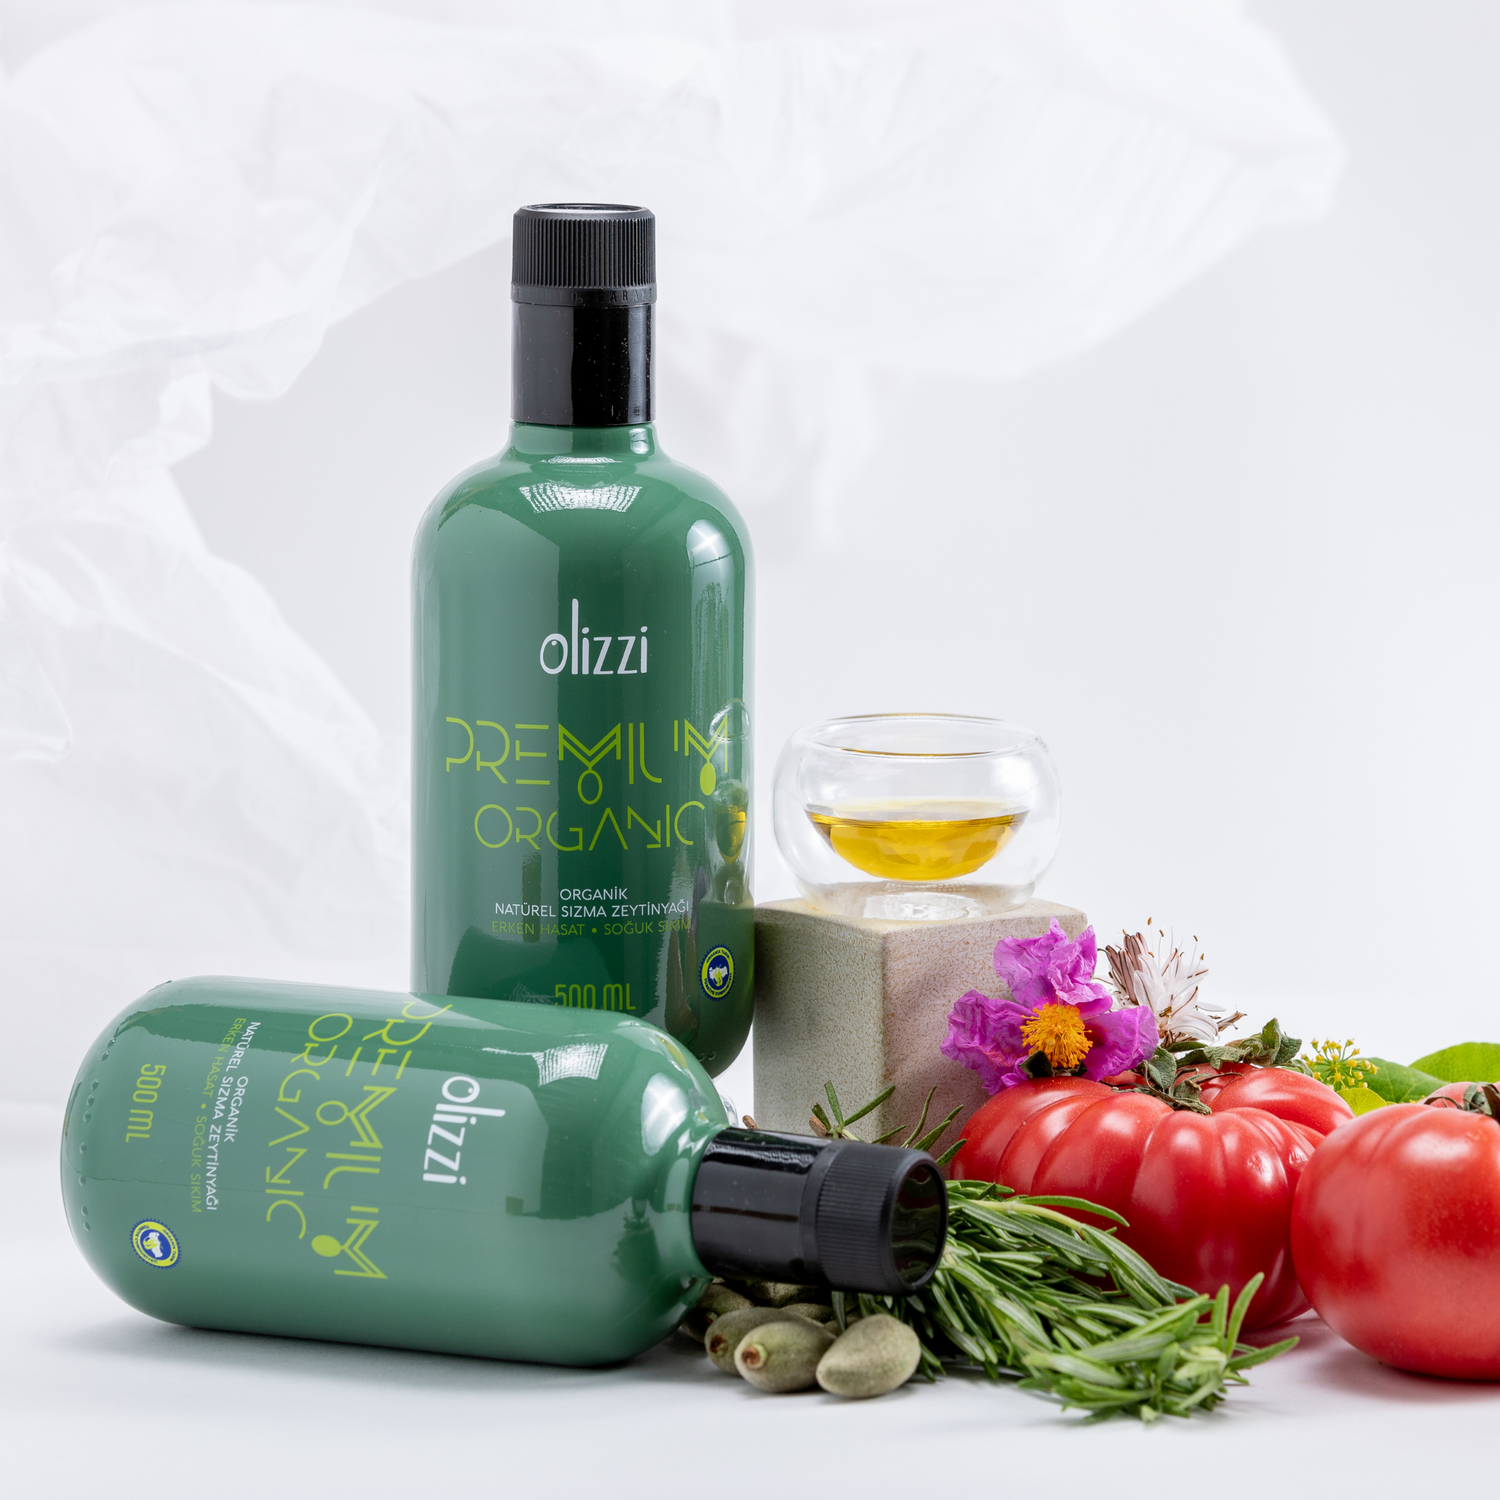 Olizzi Premium Organic Extra Virgin Olive Oil, Award Winner, Early Harvest, Cold Pressed 8.45 FL OZ